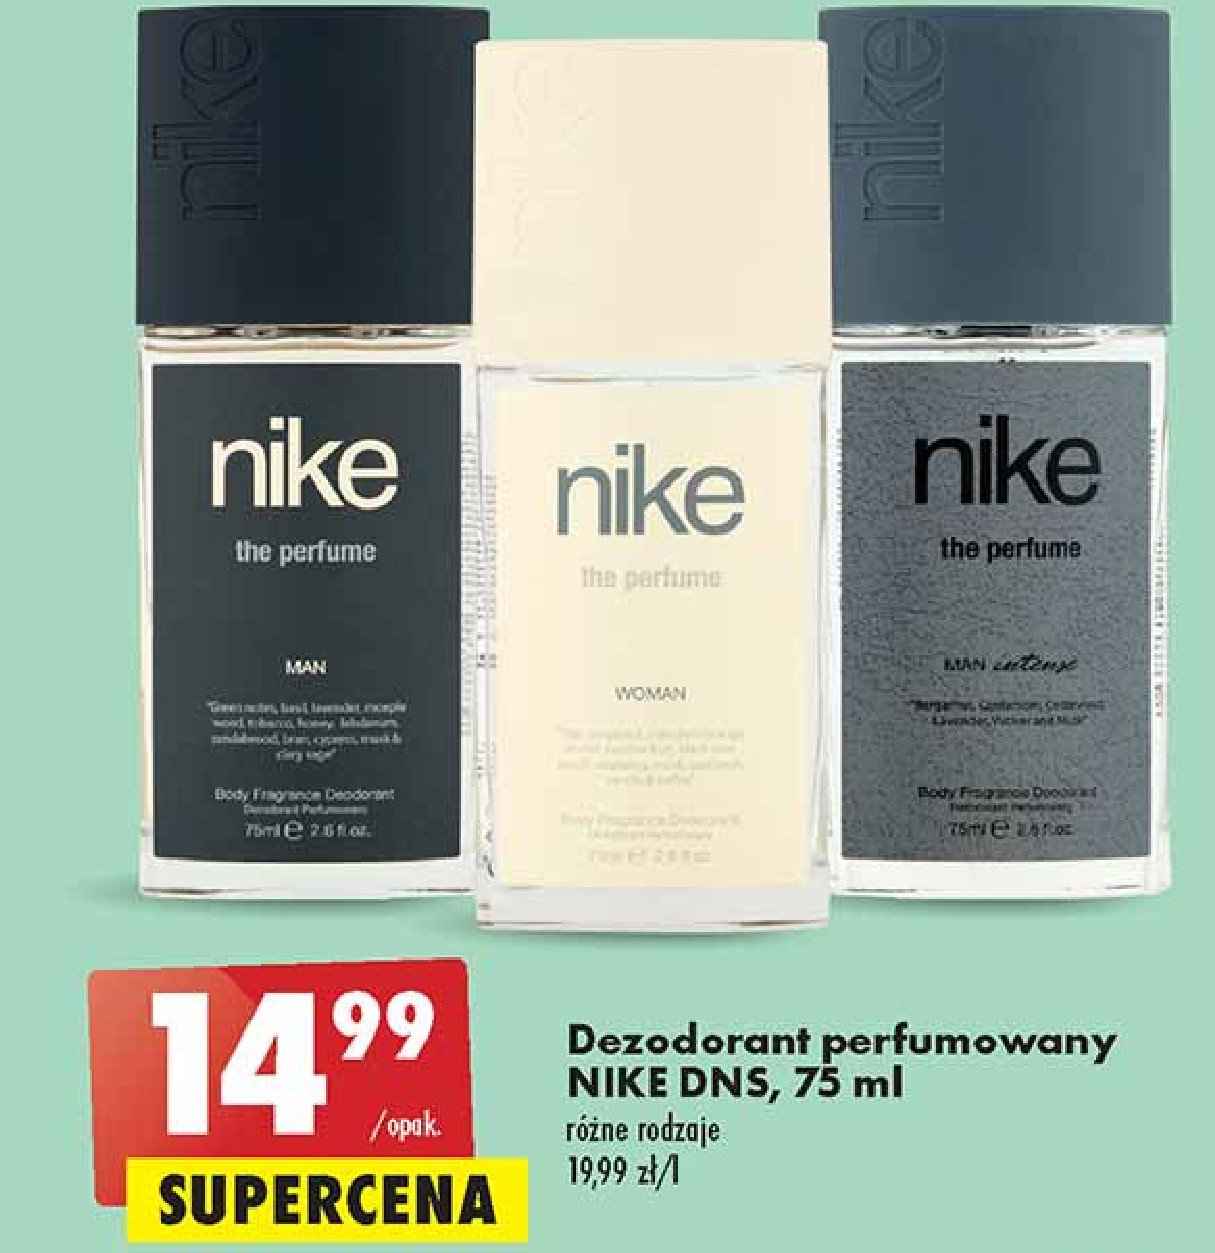 Dezodorant NIKE THE PERFUME MAN INTENSE Nike cosmetics promocje